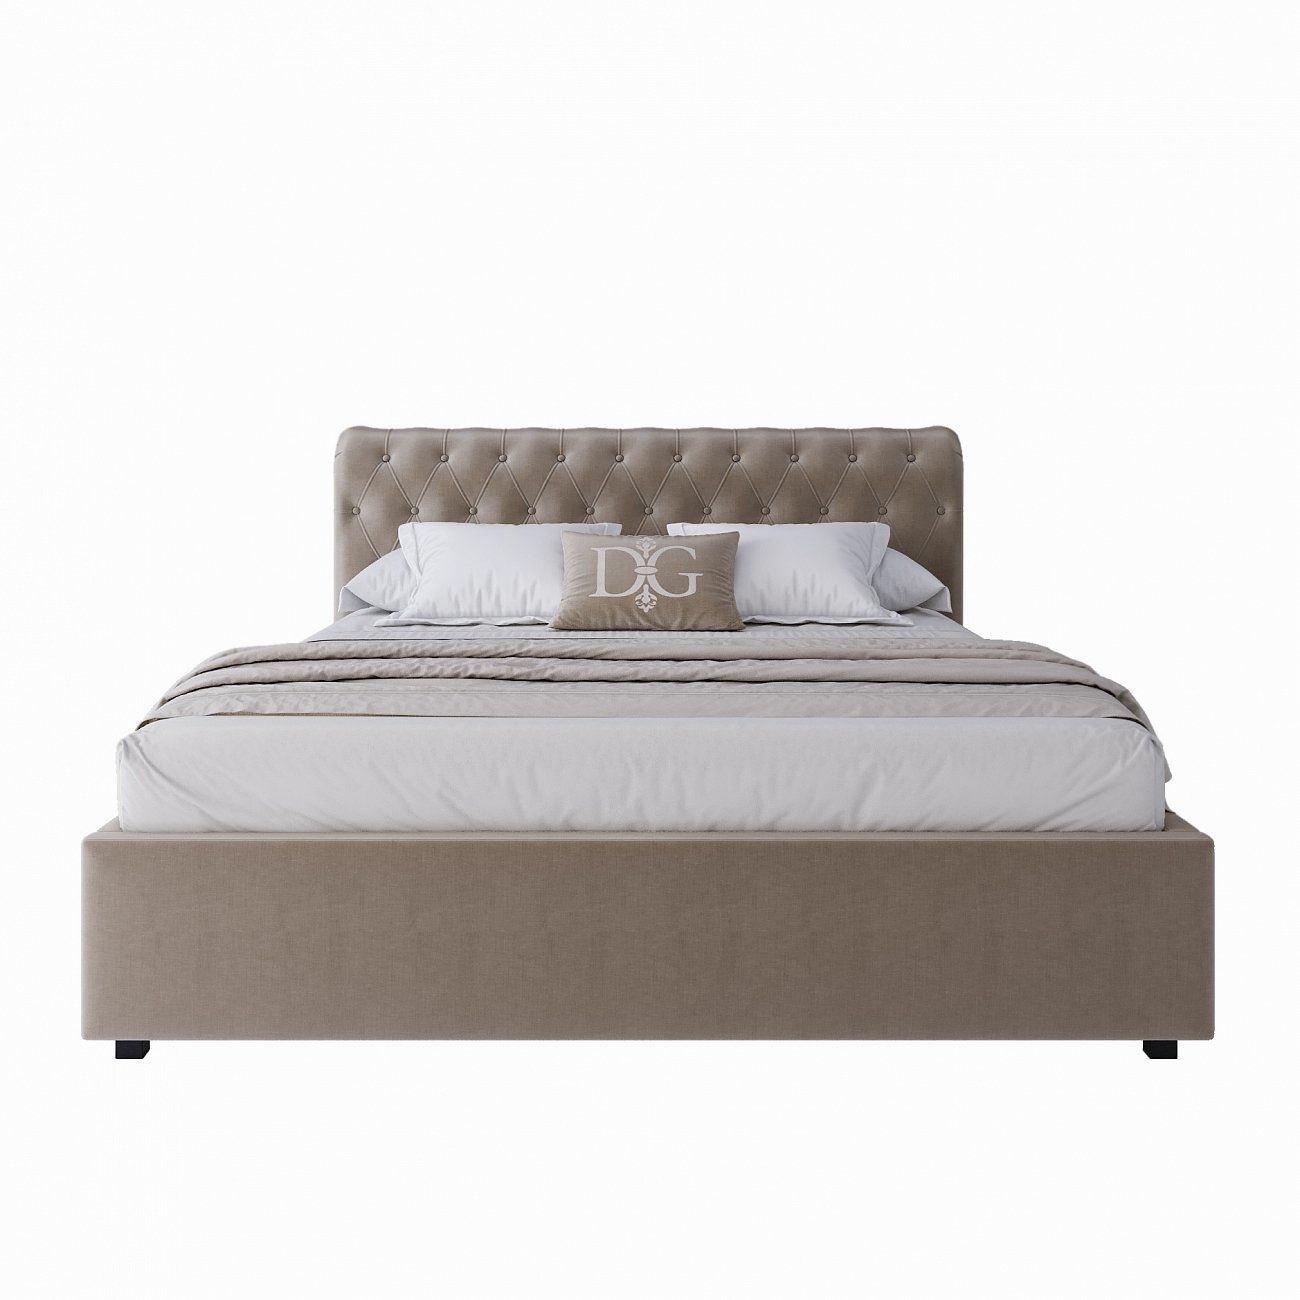 Double bed 160x200 beige velour Sweet Dreams